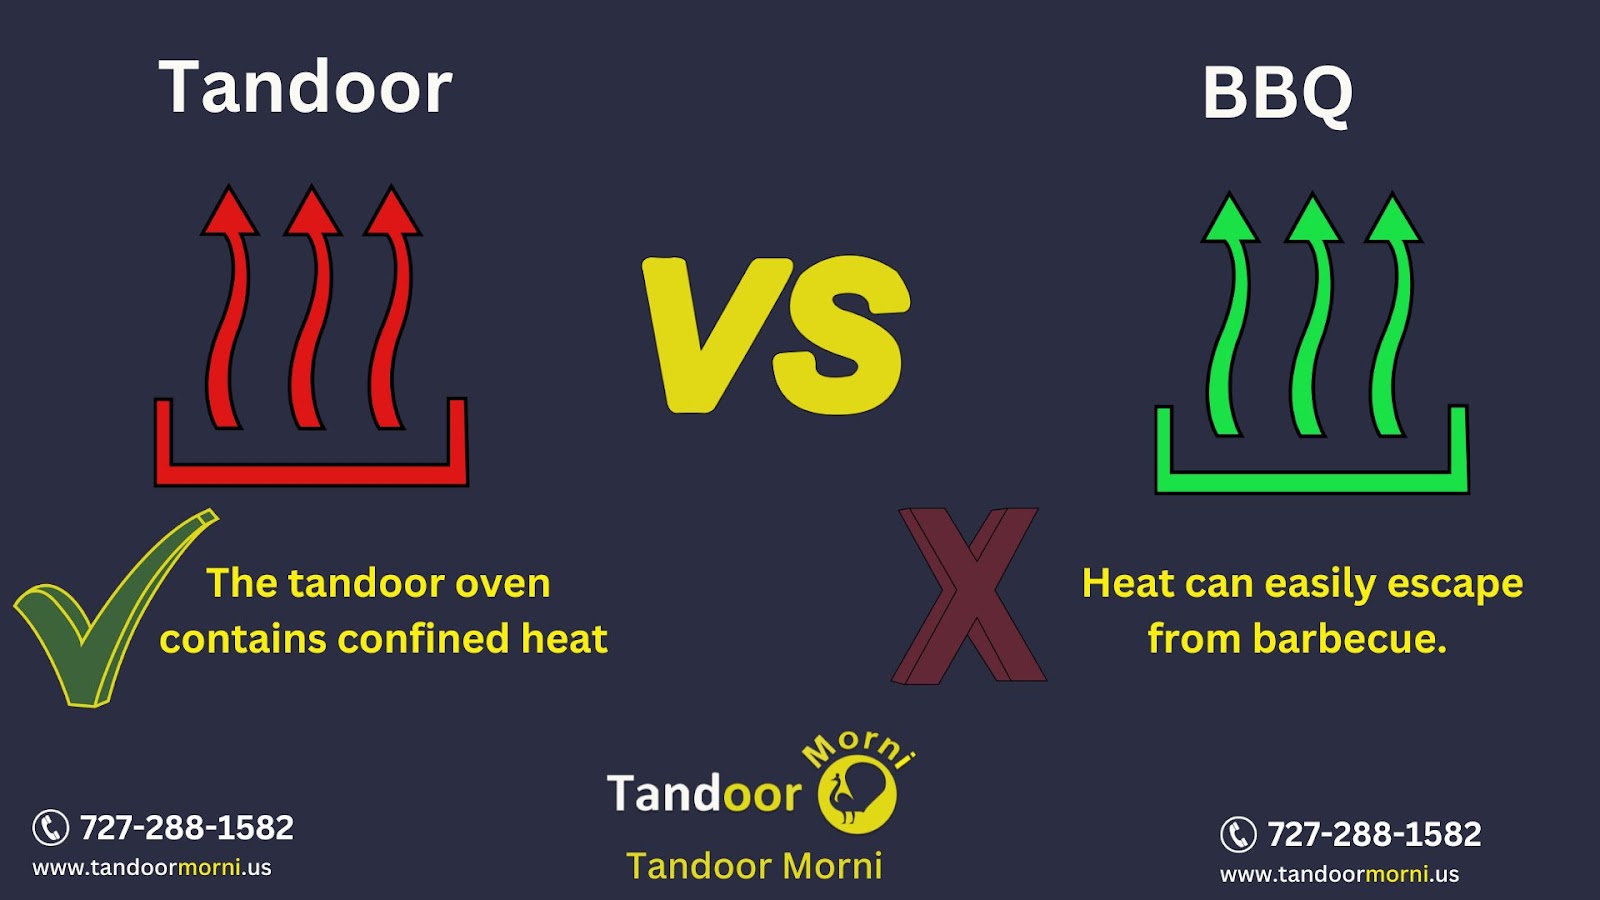 Tandoor ovens retain heat, whereas barbecue heat rapidly escapes.